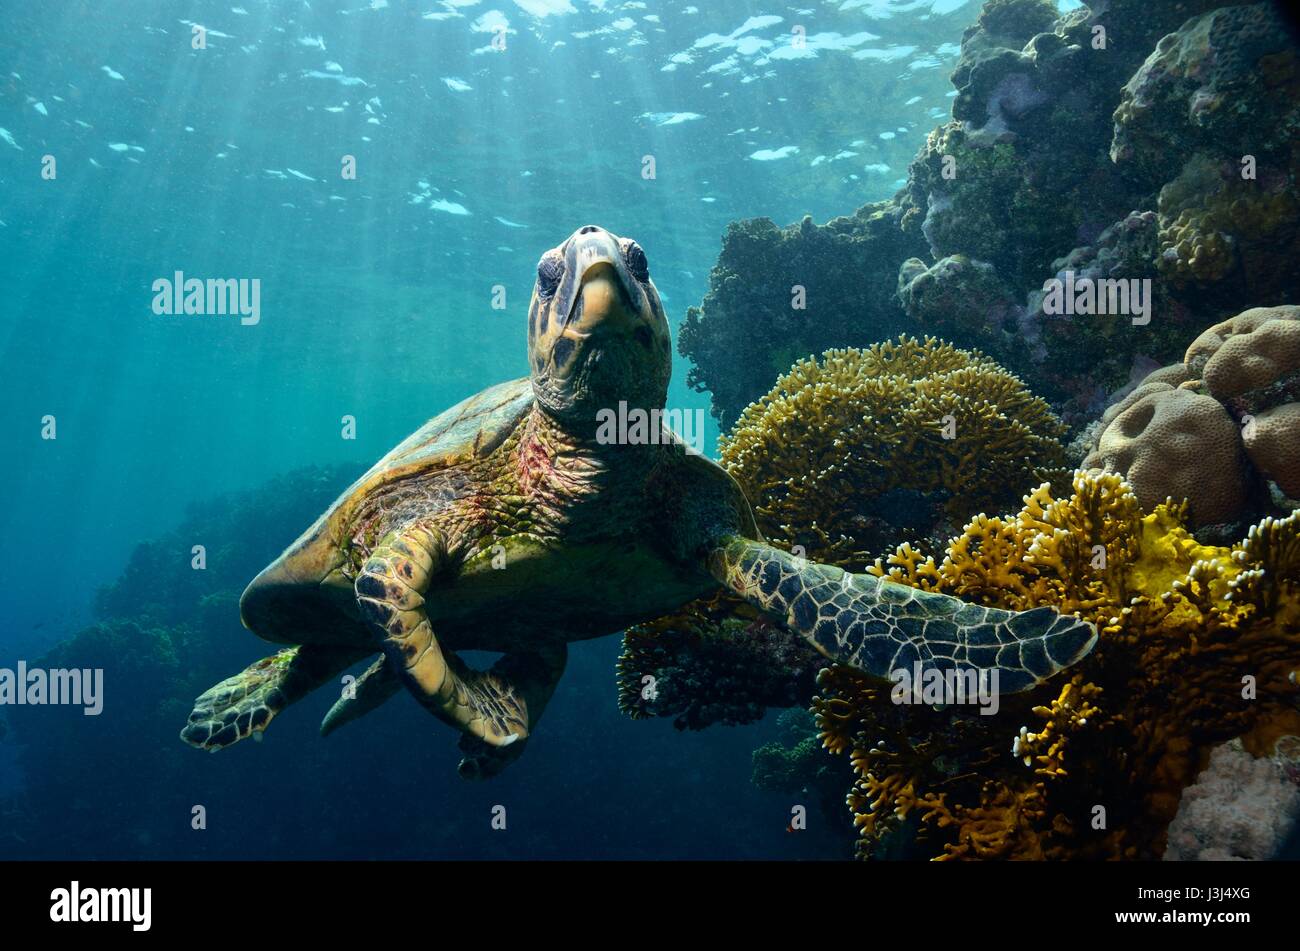 Meeresschildkröte, hawksbill sea turtle, Echte Karettschildkröte, Eretmochelys imbricata, red sea, egypt, Rotes Meer, Ägypten, underwaterphoto Stock Photo